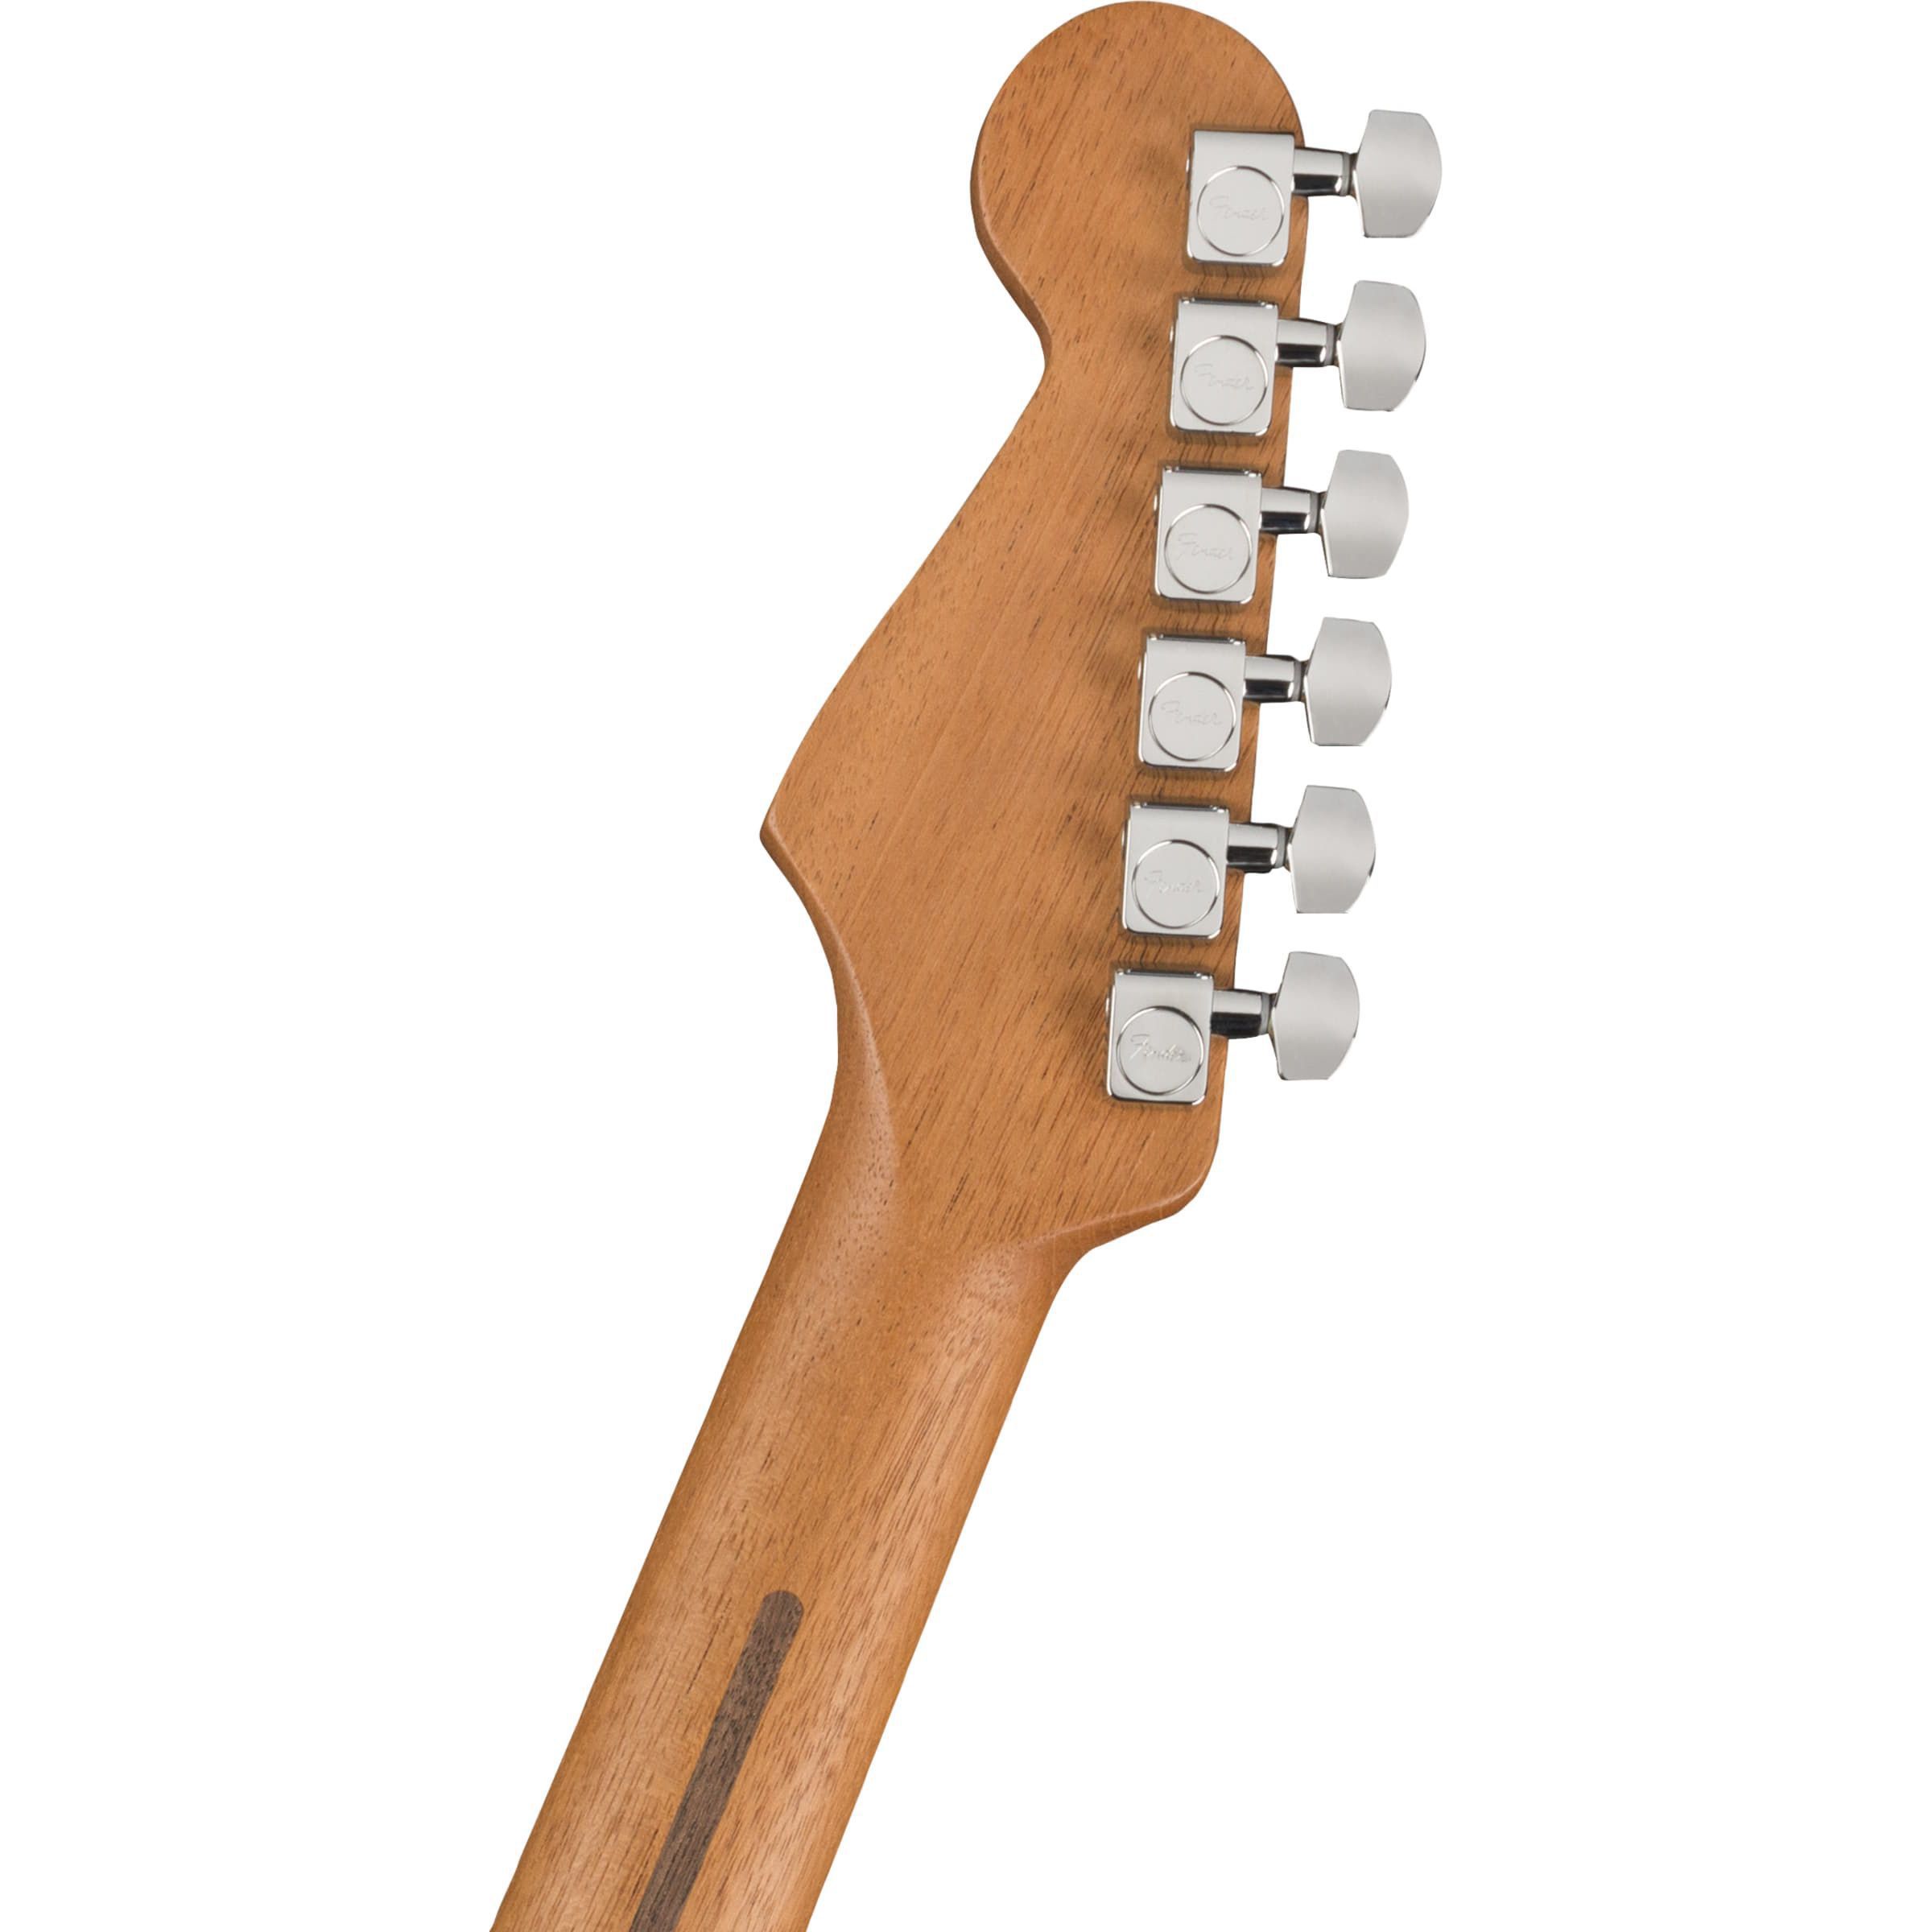 Fender Acoustasonic Stratocaster 3 Tone Sunburst Гитары акустические